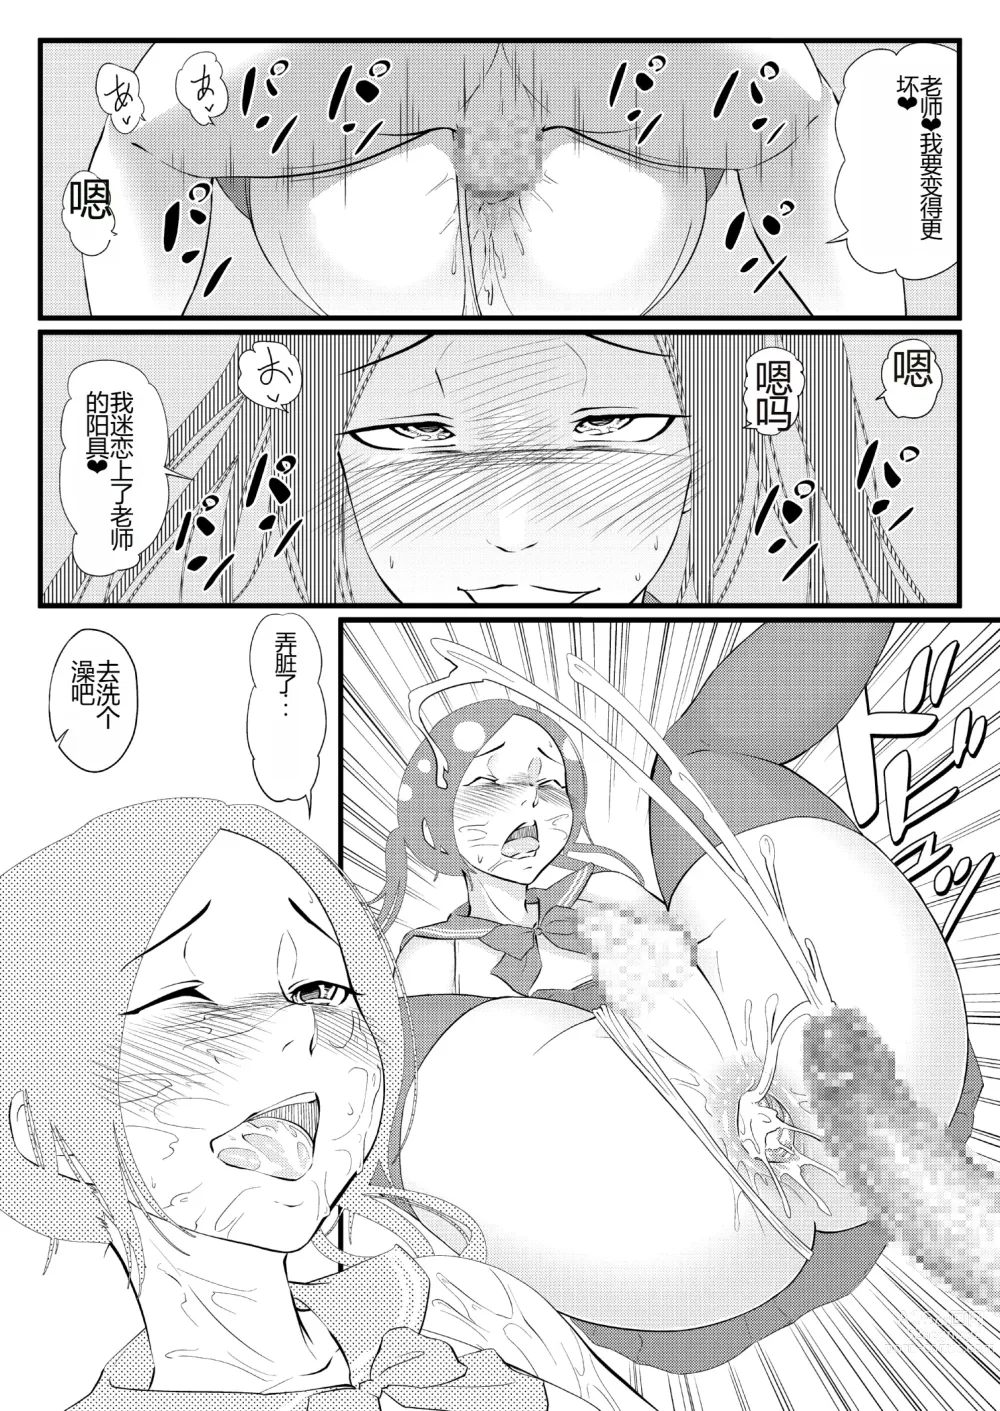 Page 12 of doujinshi Agitated Man